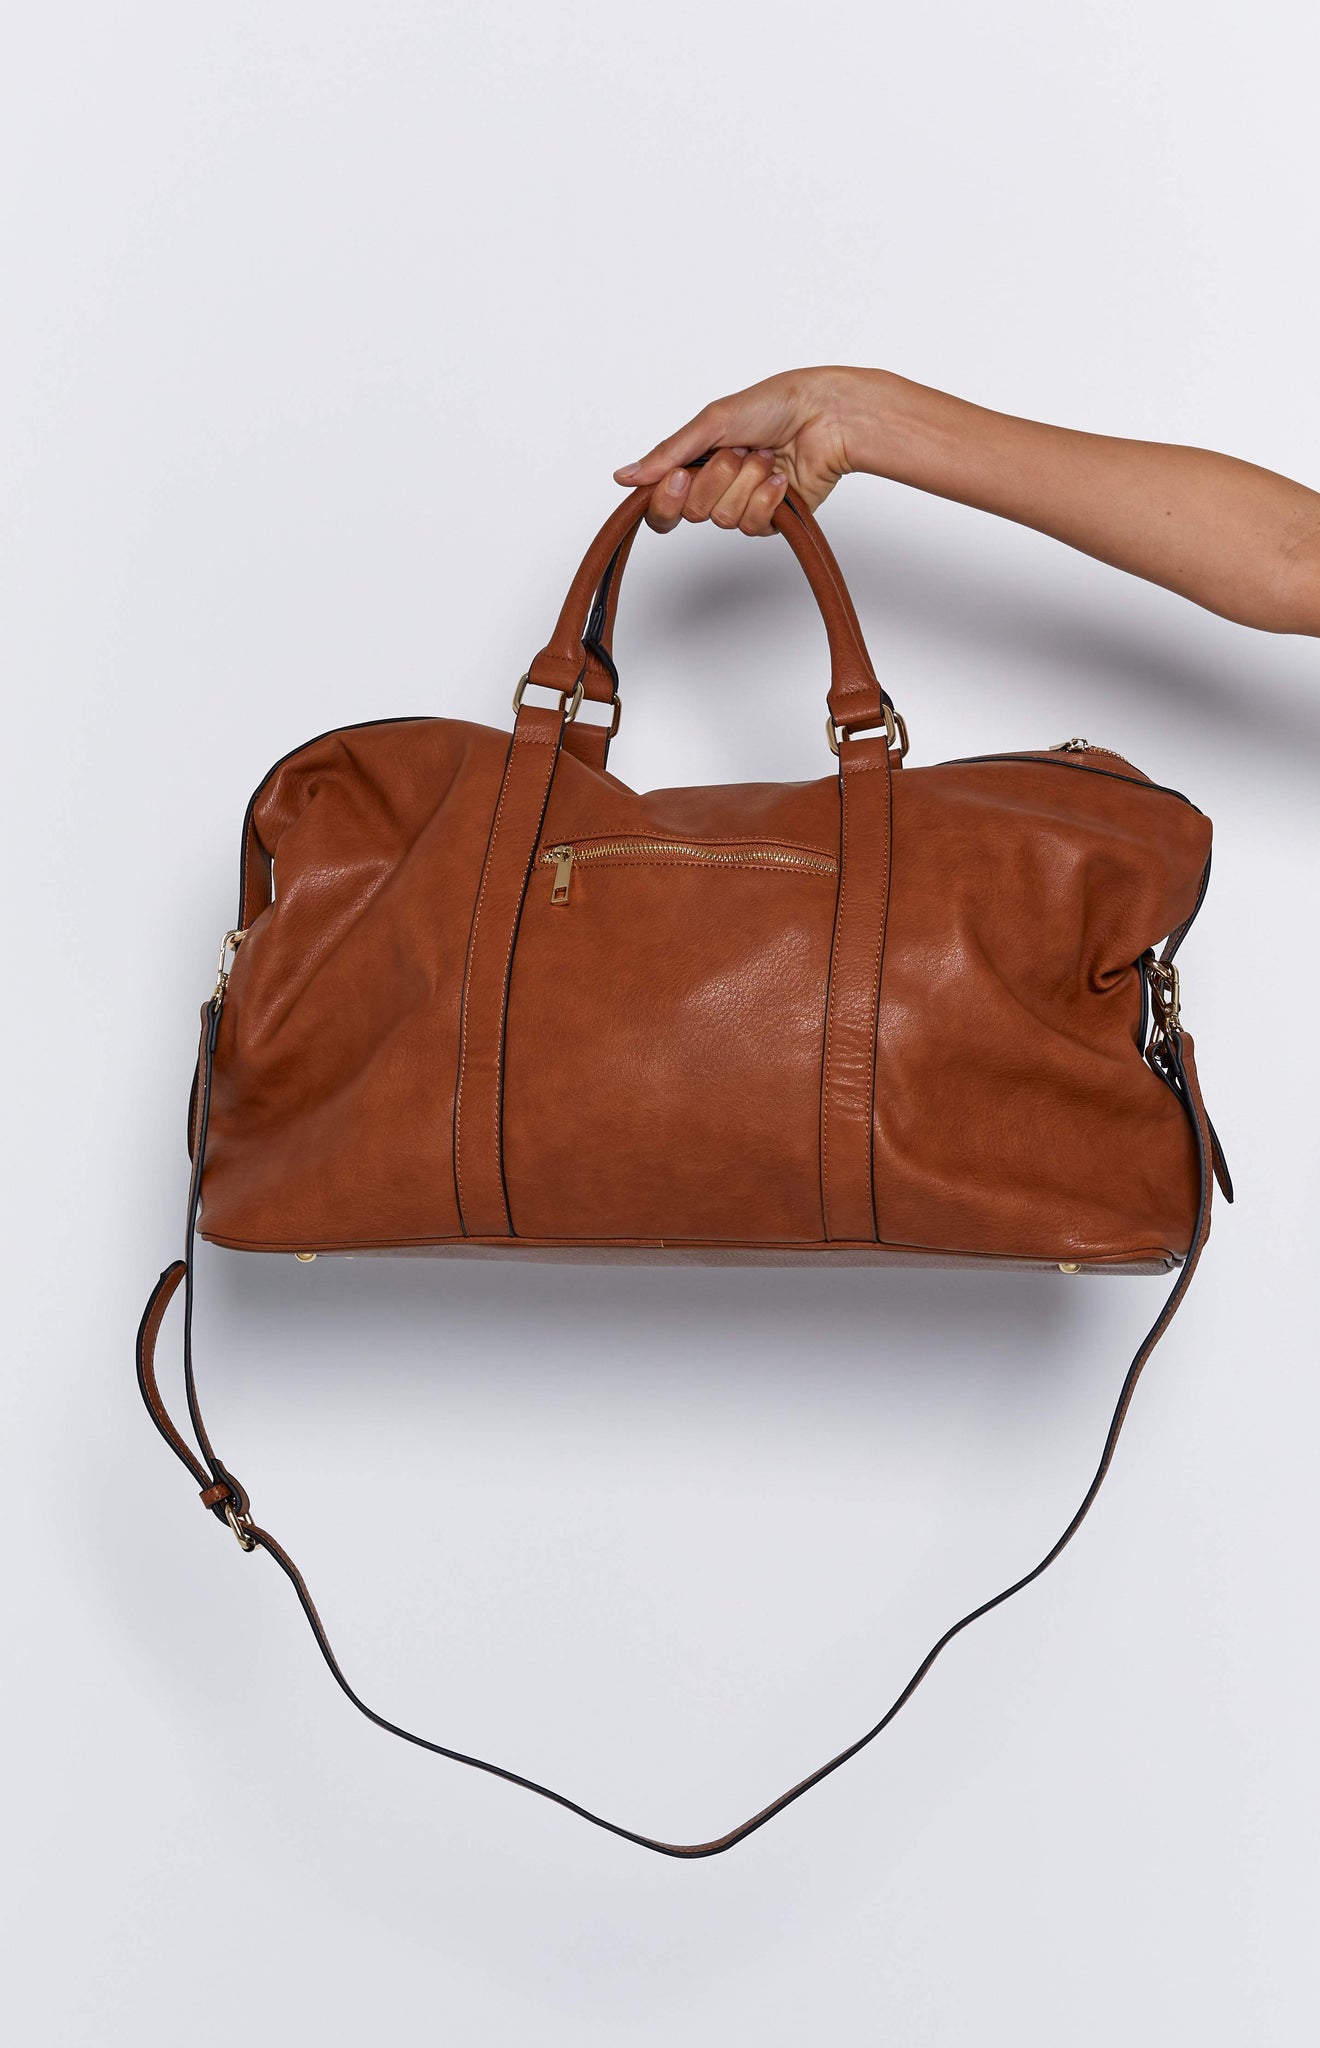 Peta & Jain Bags Online – Beginning Boutique